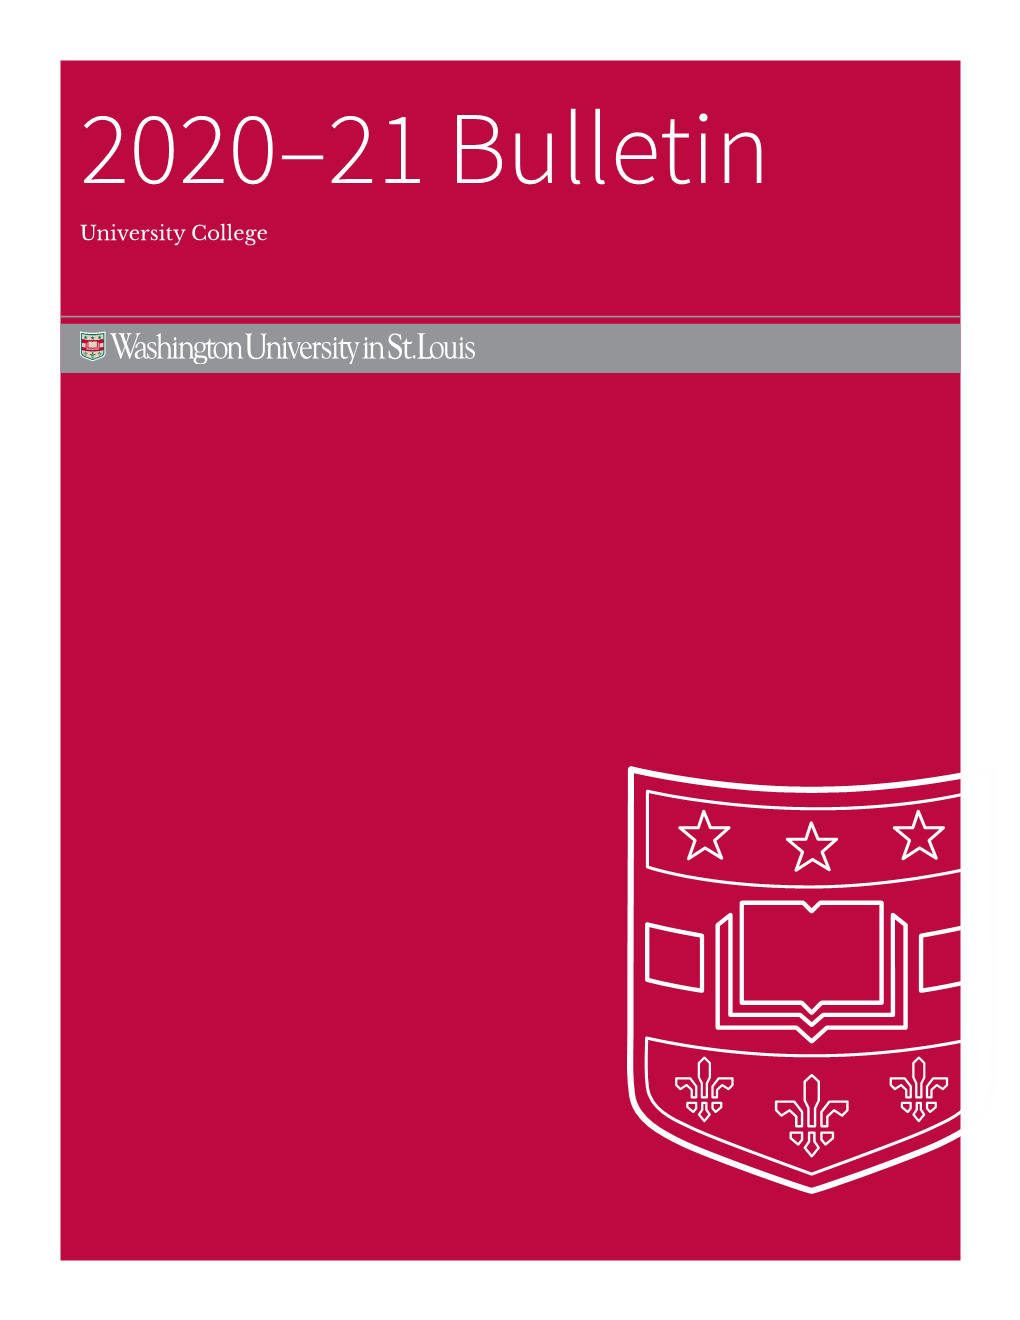 2020-21 Bulletin: University College